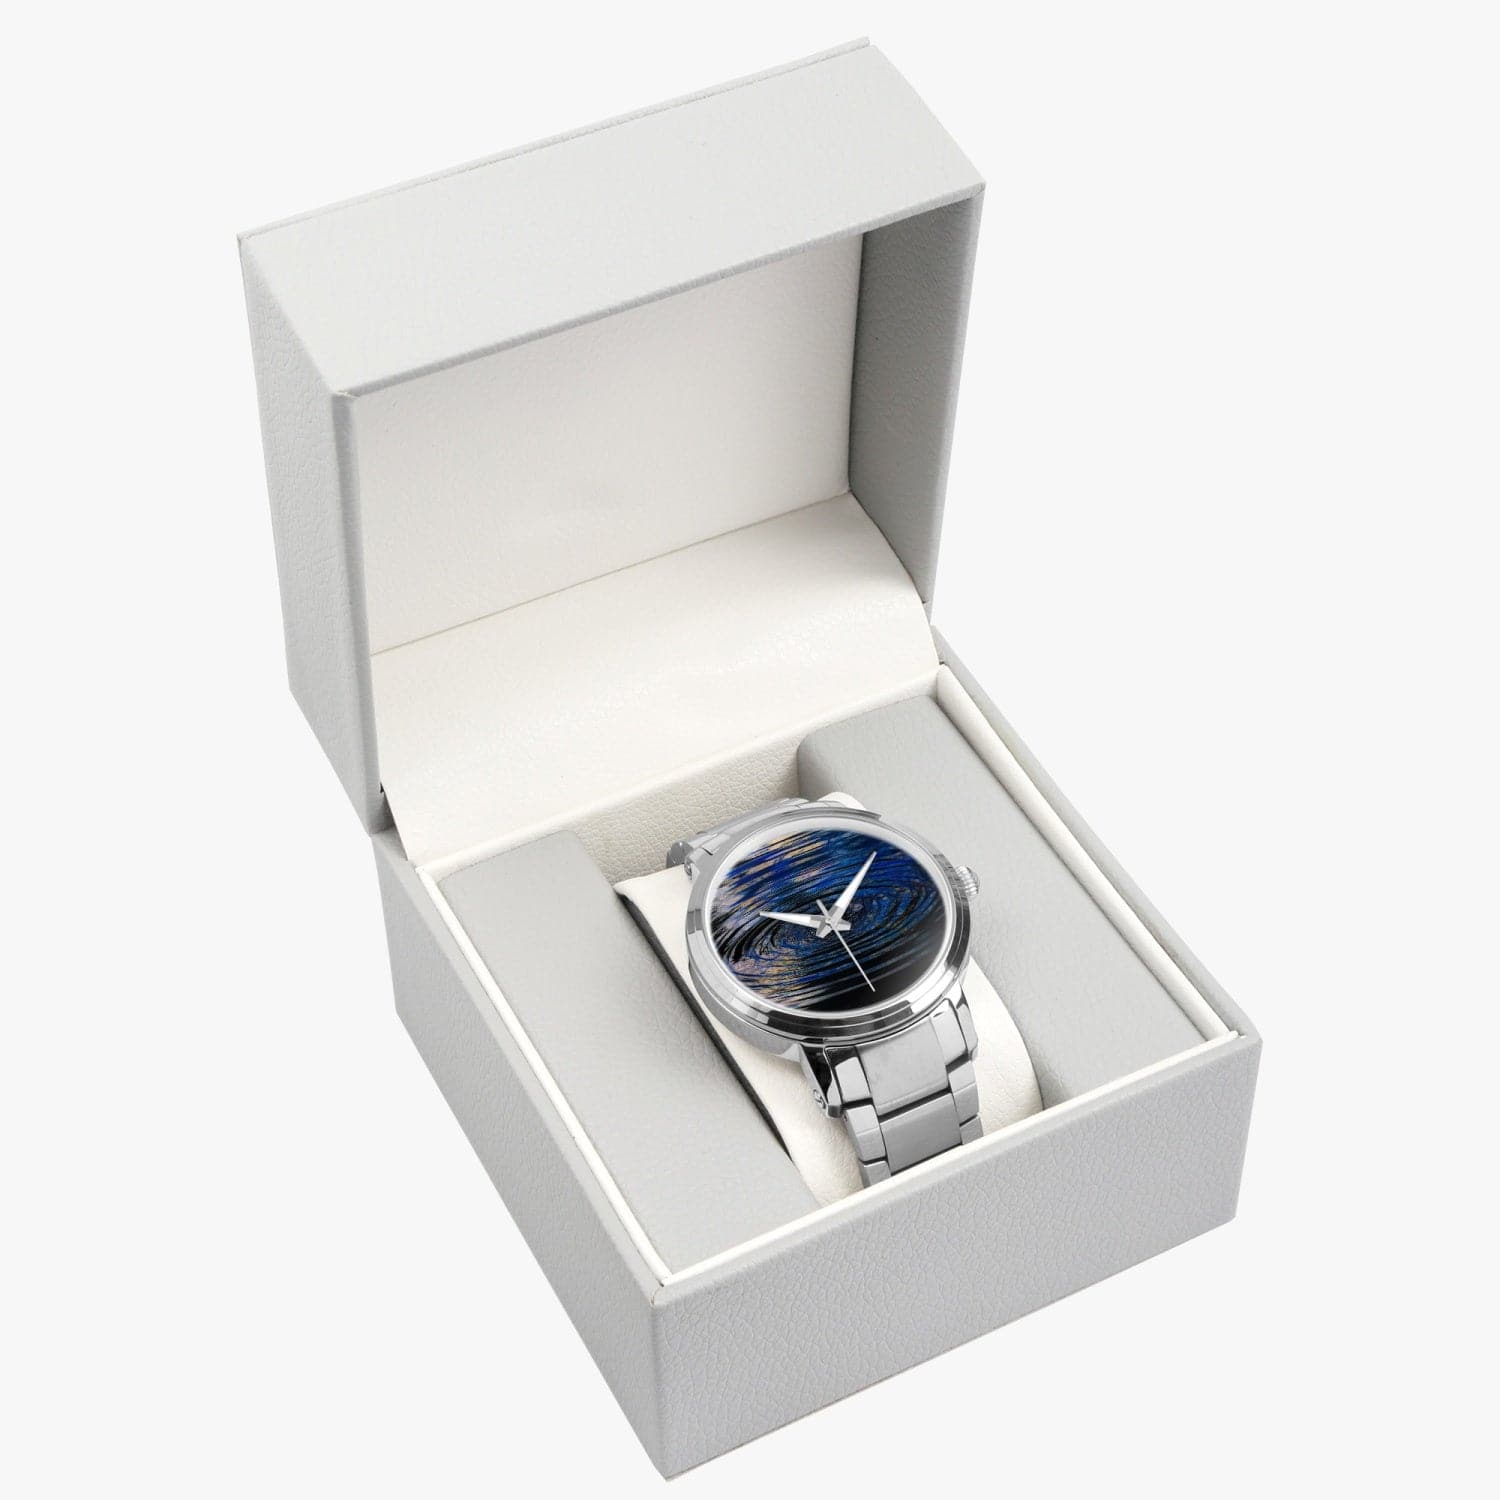 Black water.  New Steel Strap Automatic Watch. Designer watch by Sensus Studio design